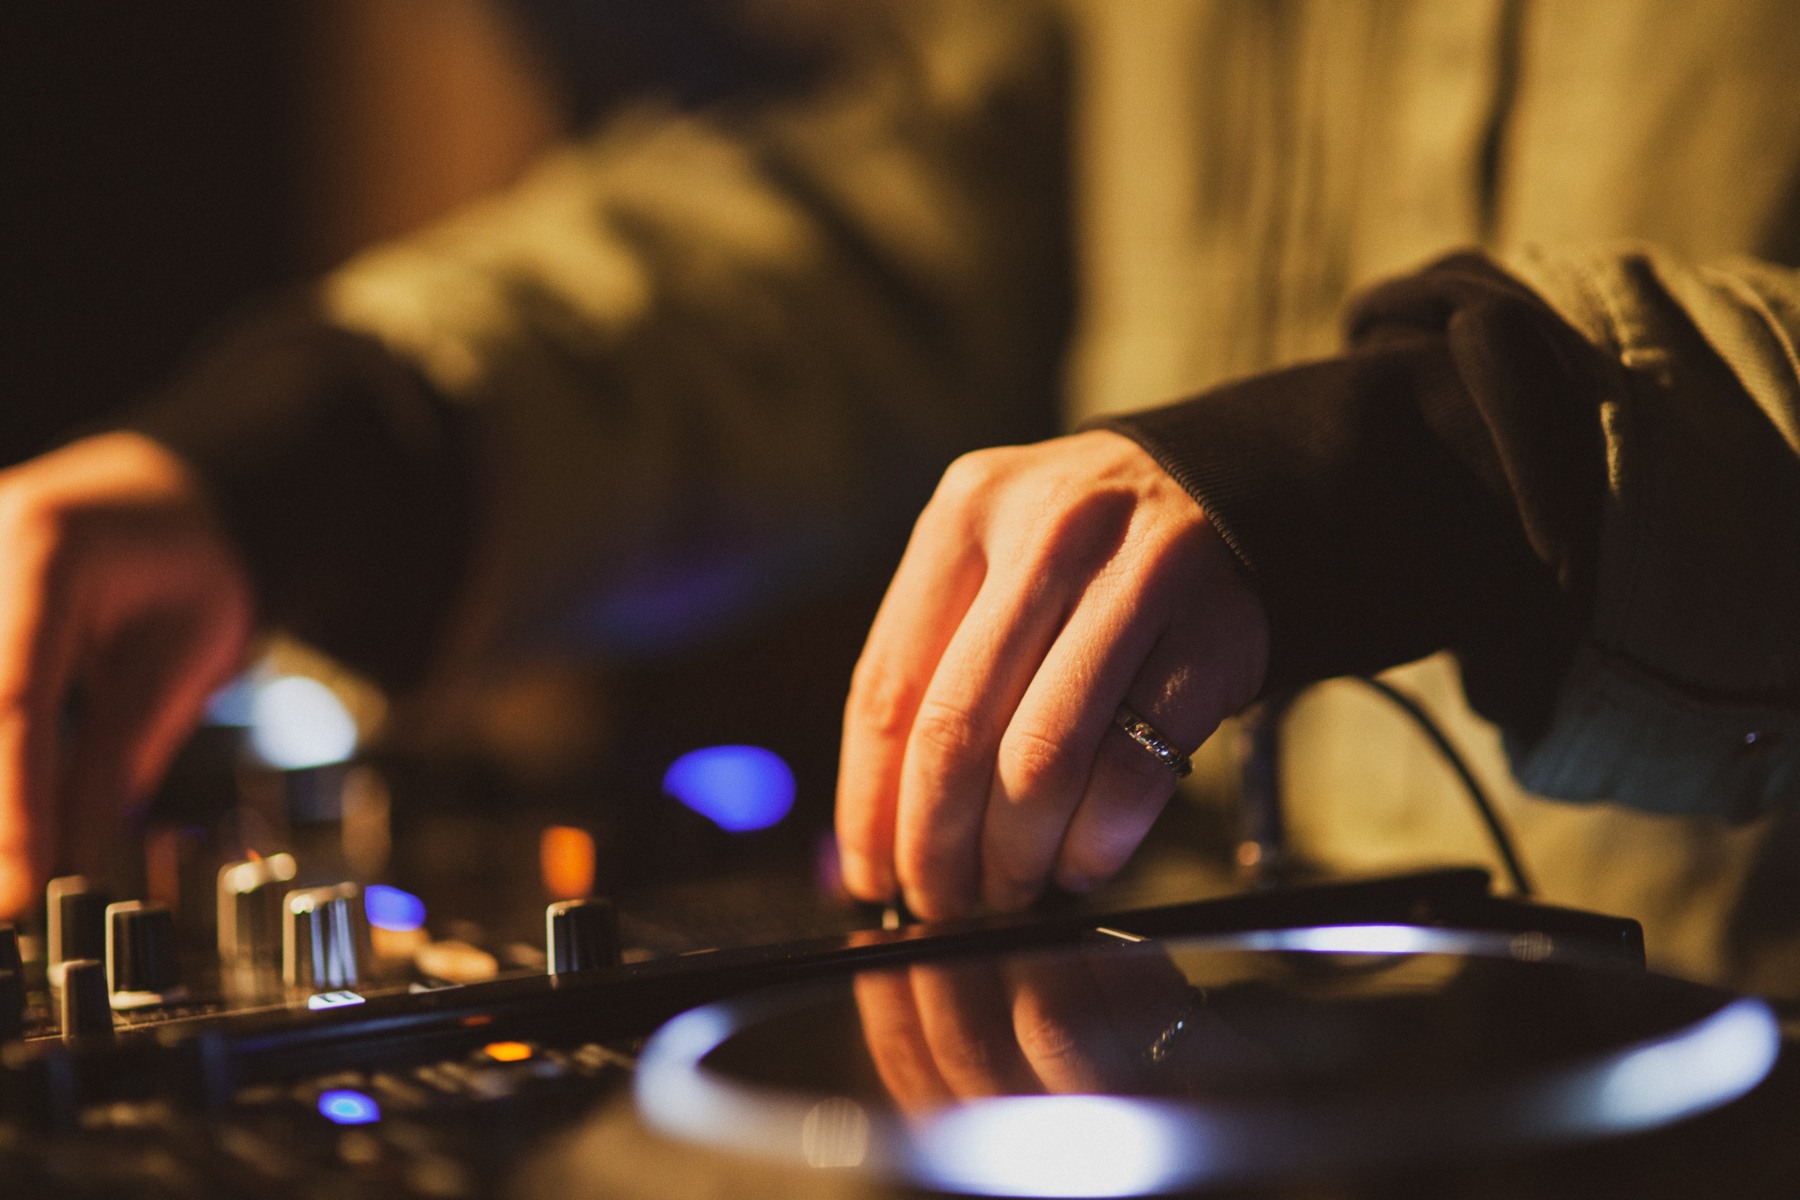 Yushh DJ - Capture technology - Mixing on DJ decks